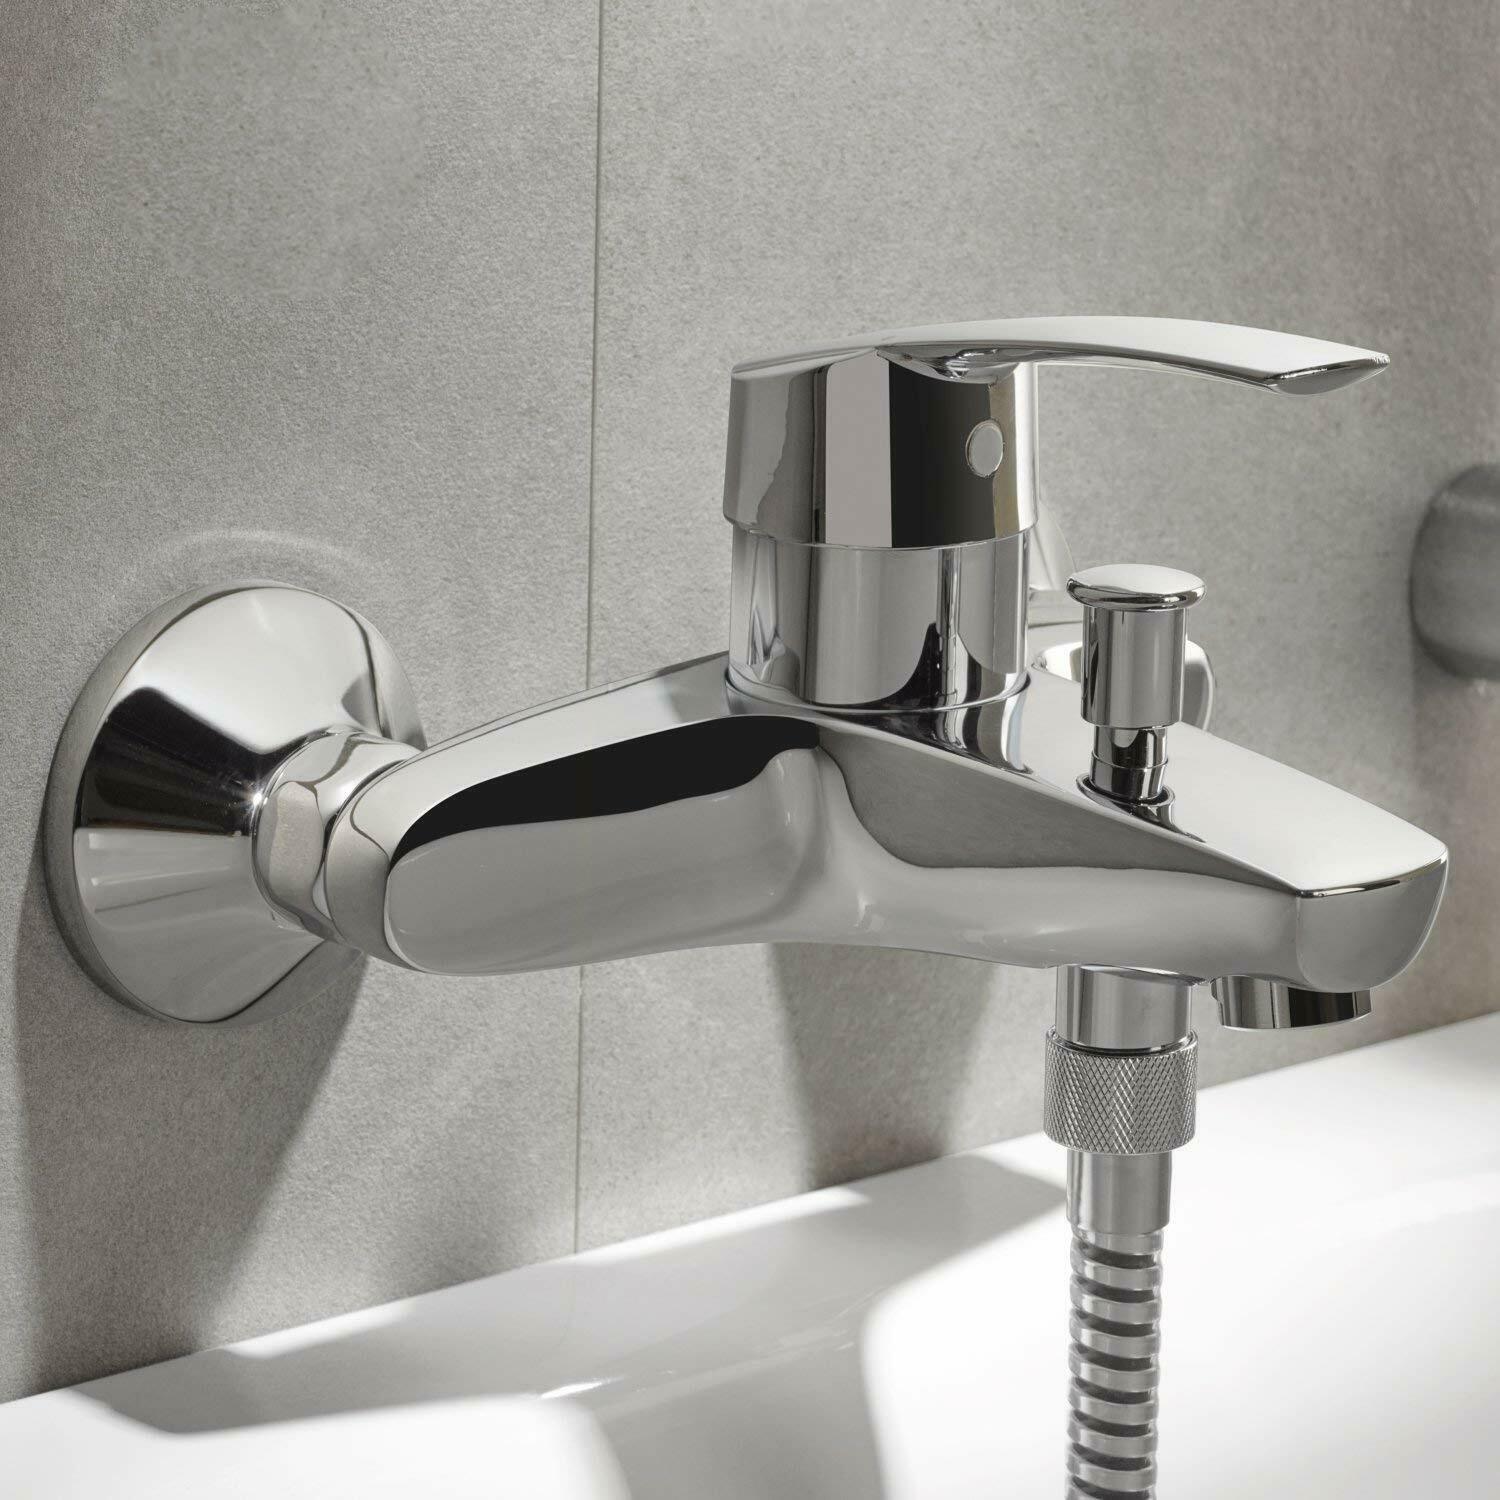 Grohe Eurosmart Single-lever Bath & Shower Mixer 1/2", Chrome | Supply Master | Accra, Ghana Bathroom Faucet Buy Tools hardware Building materials